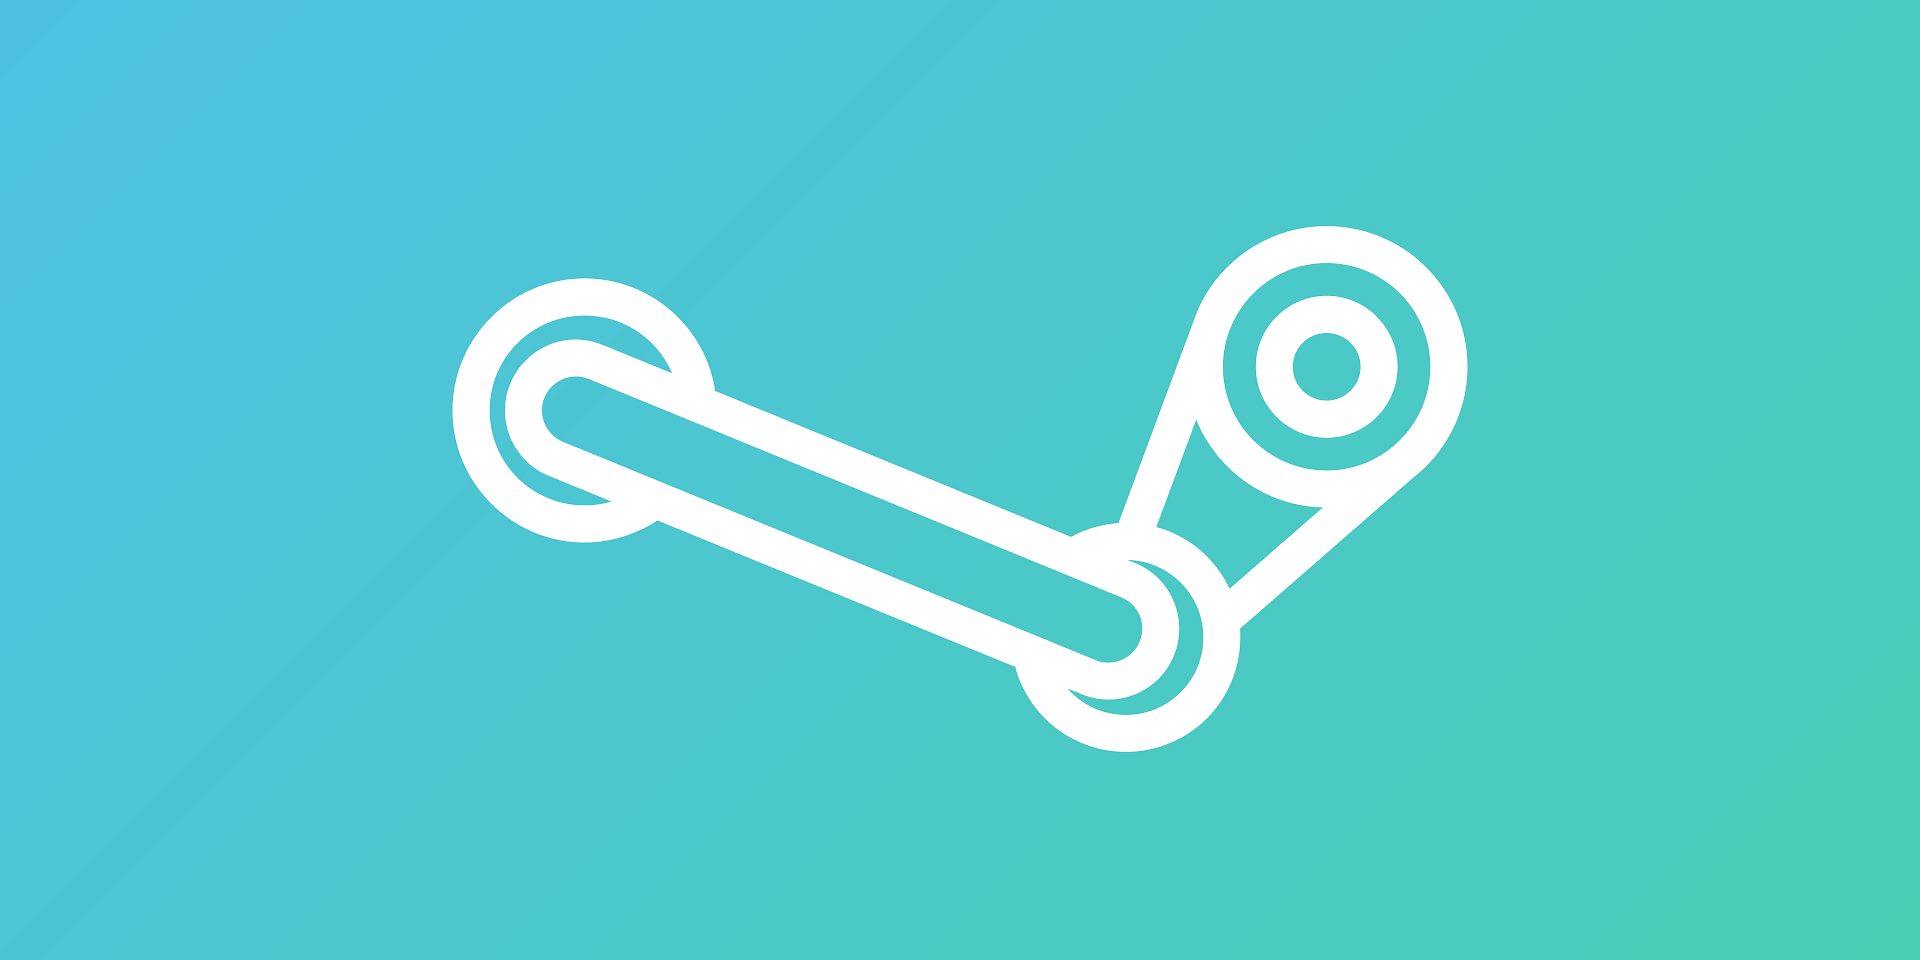 Steam logo on a green gradient background.